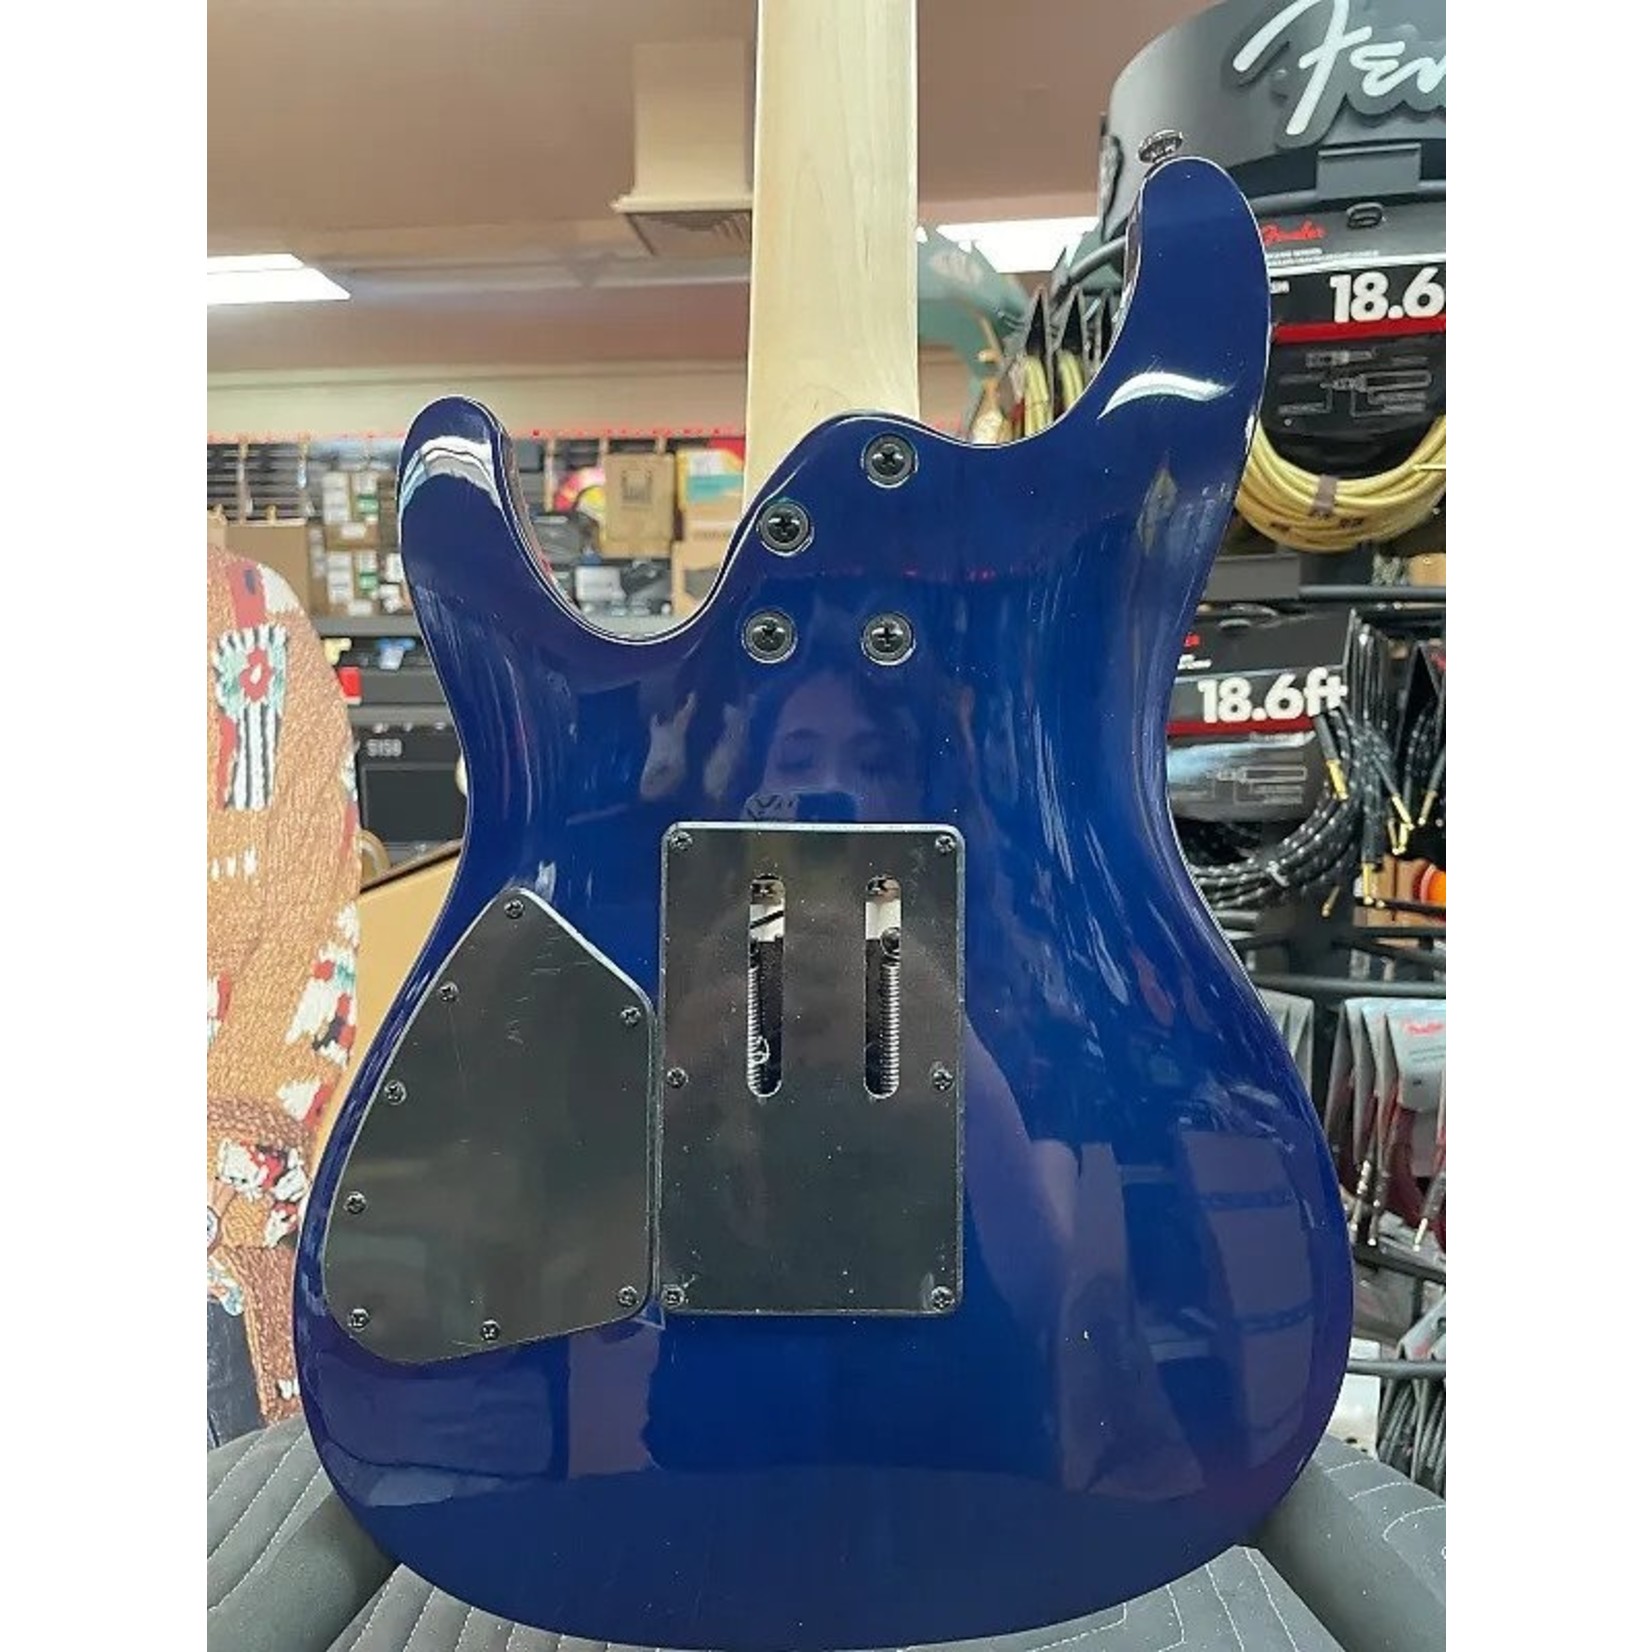 Ibanez Ibanez S670QM Electric Guitar - Sapphire Blue